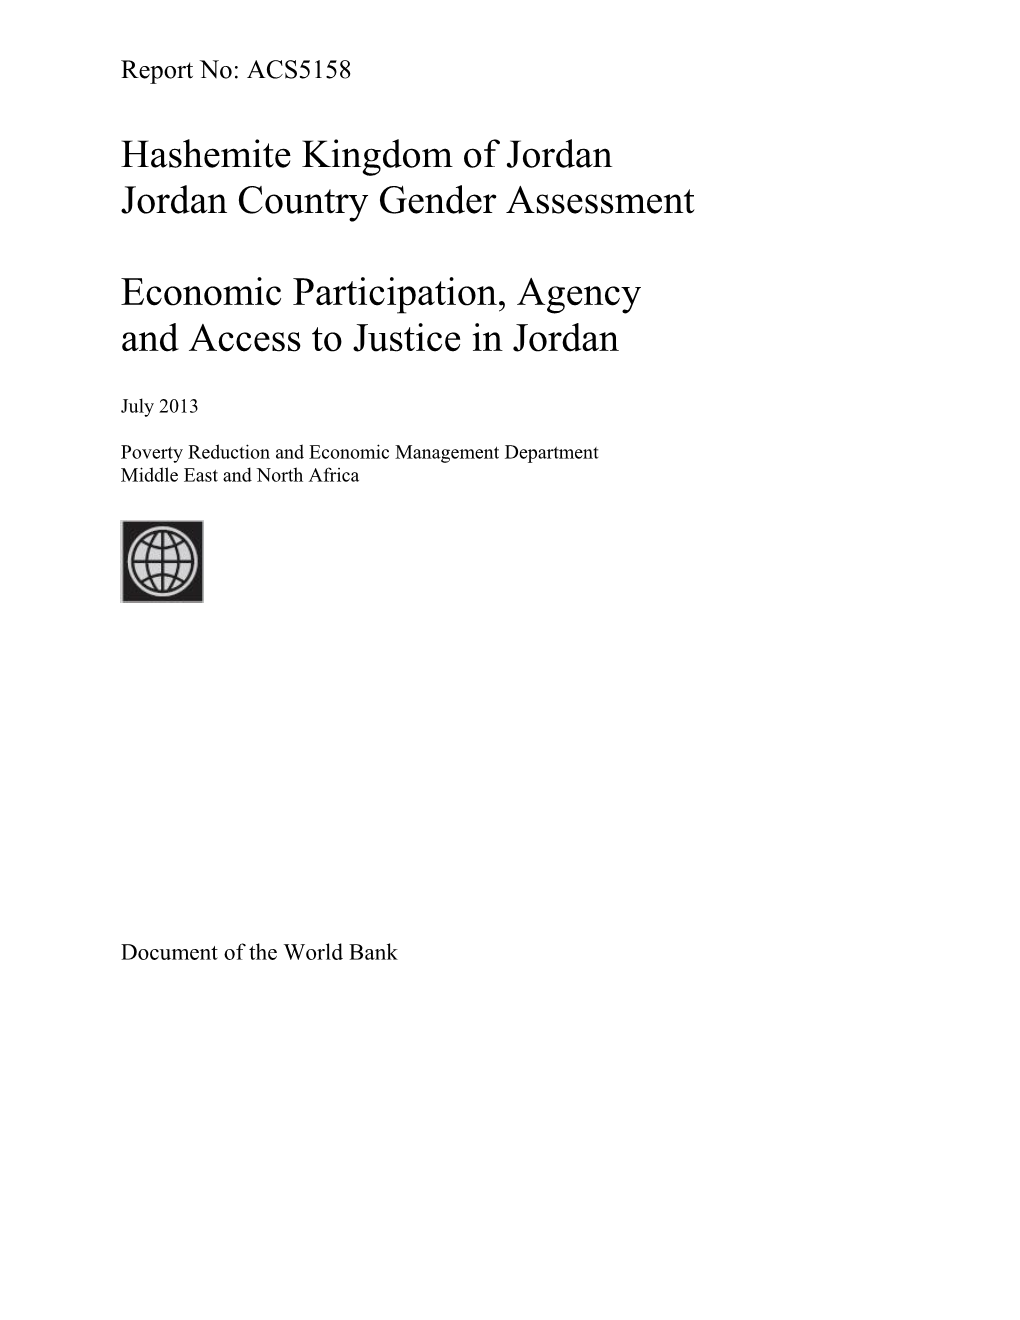 Jordan Country Gender Assessment